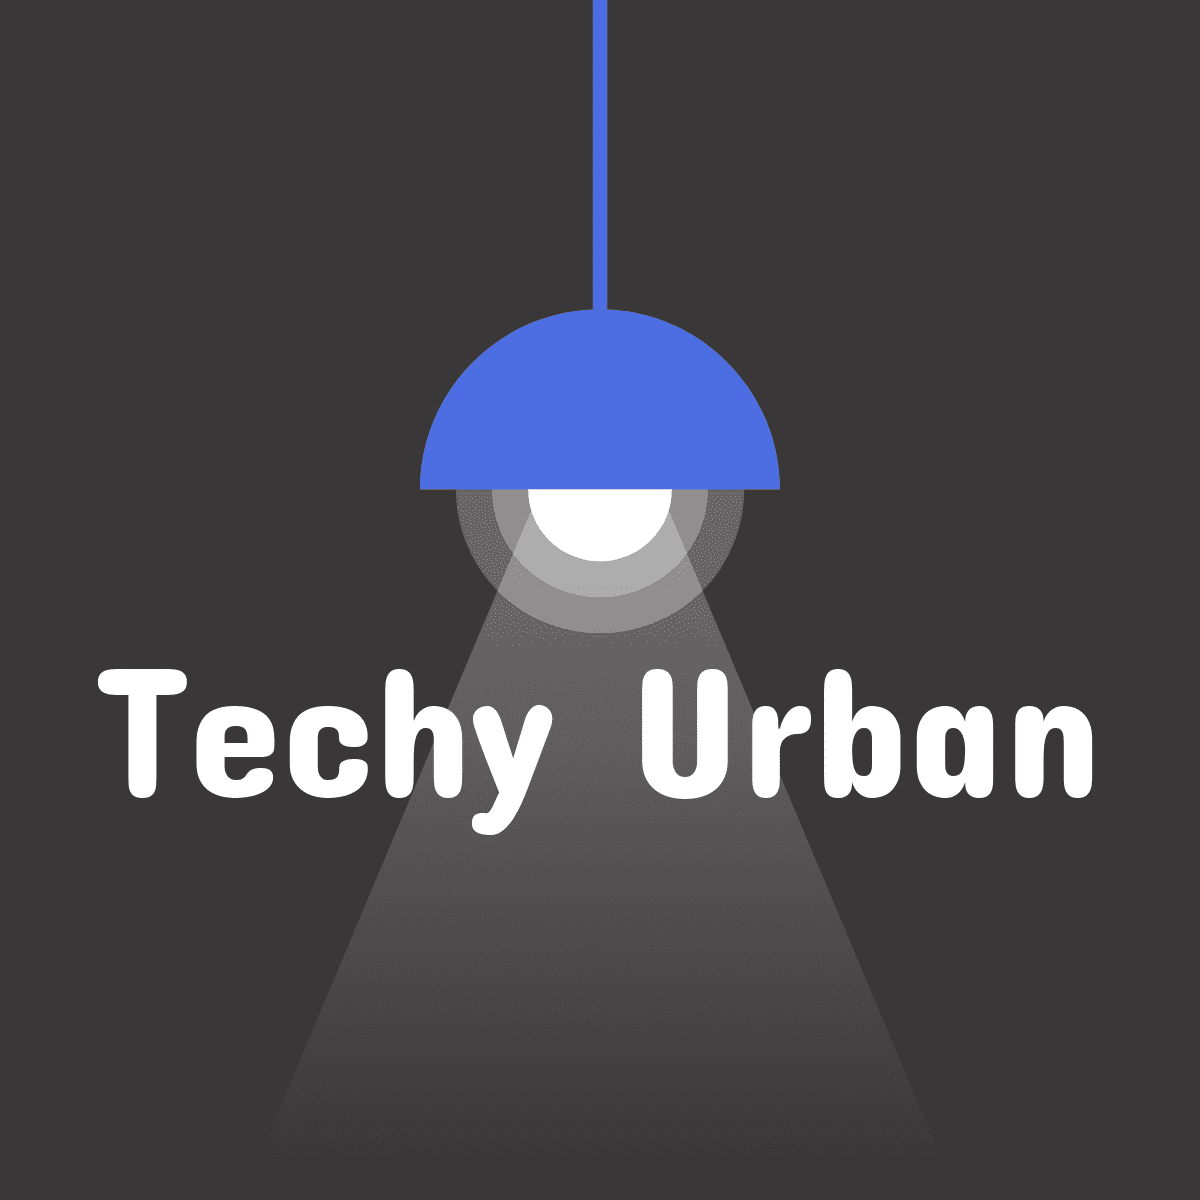 Tech Urban